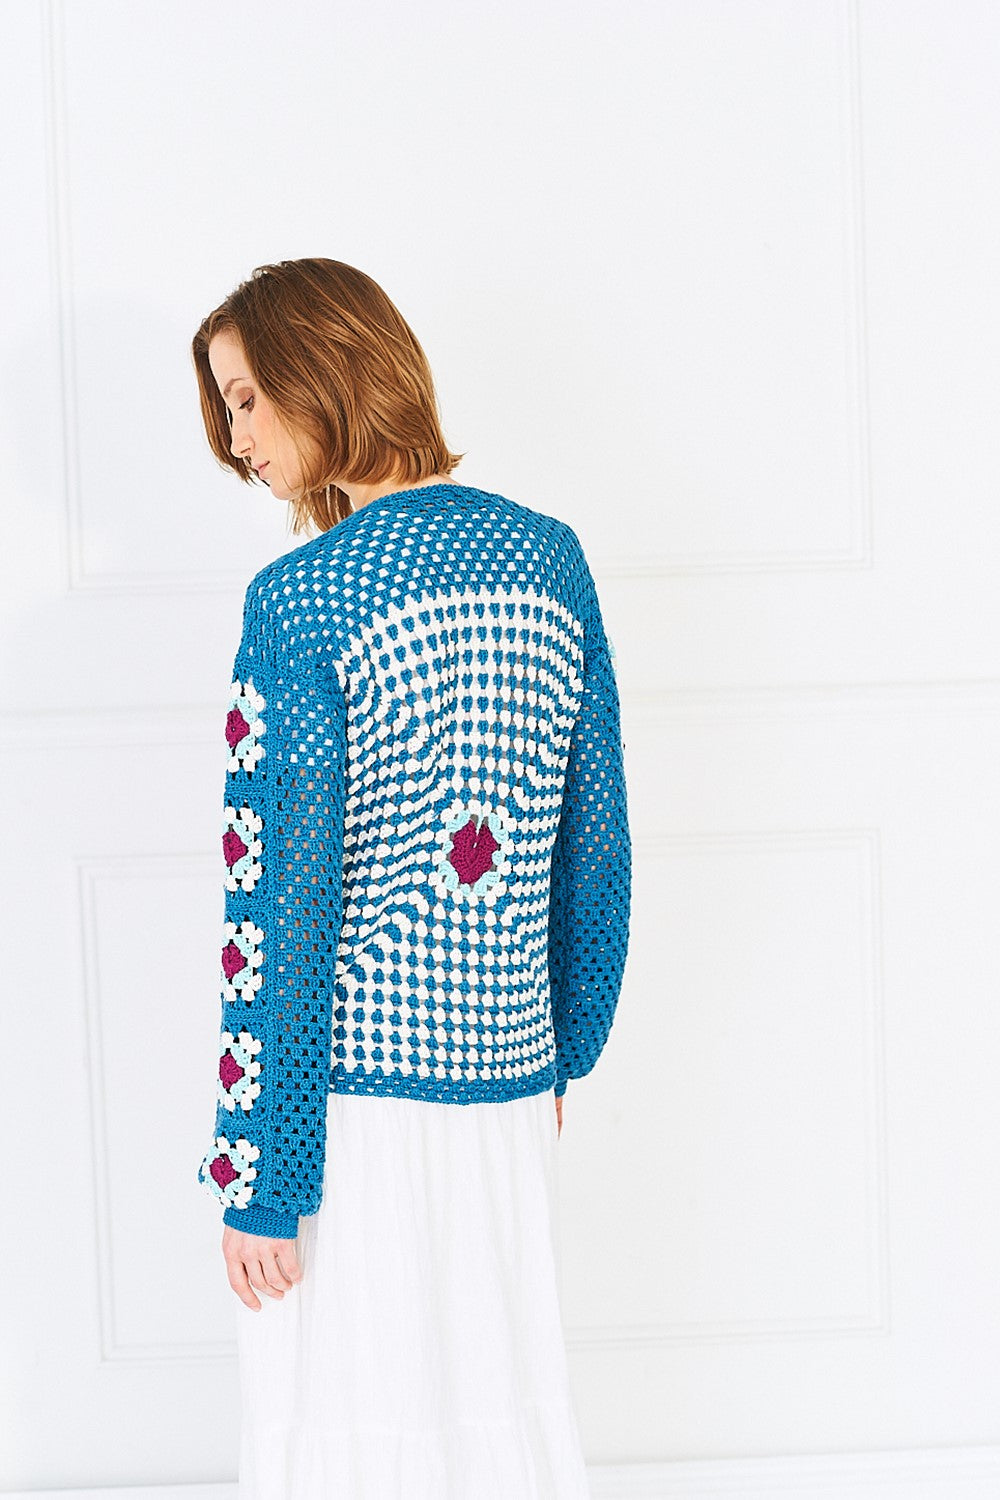 Crochet Pattern 9993 - Crochet Cardigan & Top in Bamboo + Cotton